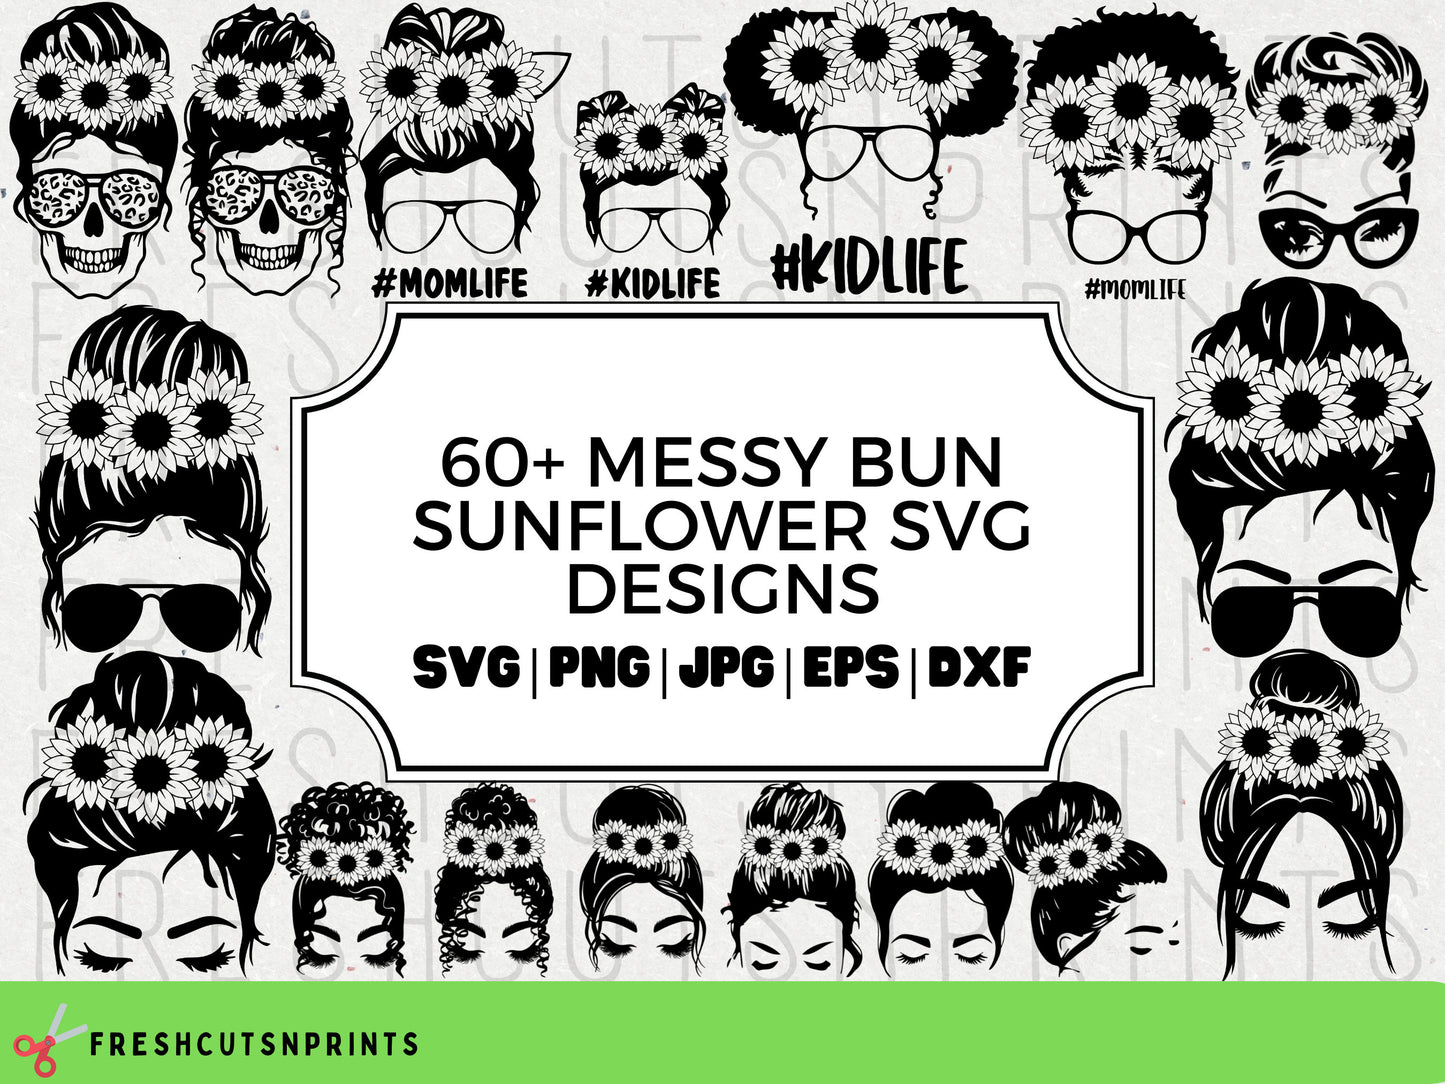 60+ Messy Bun Sunflower SVG, Messy bun svg, Momlife svg, Best mom svg, Mothers Day svg, Sunflower Lover svg, Sunflower designs, Mommy svg